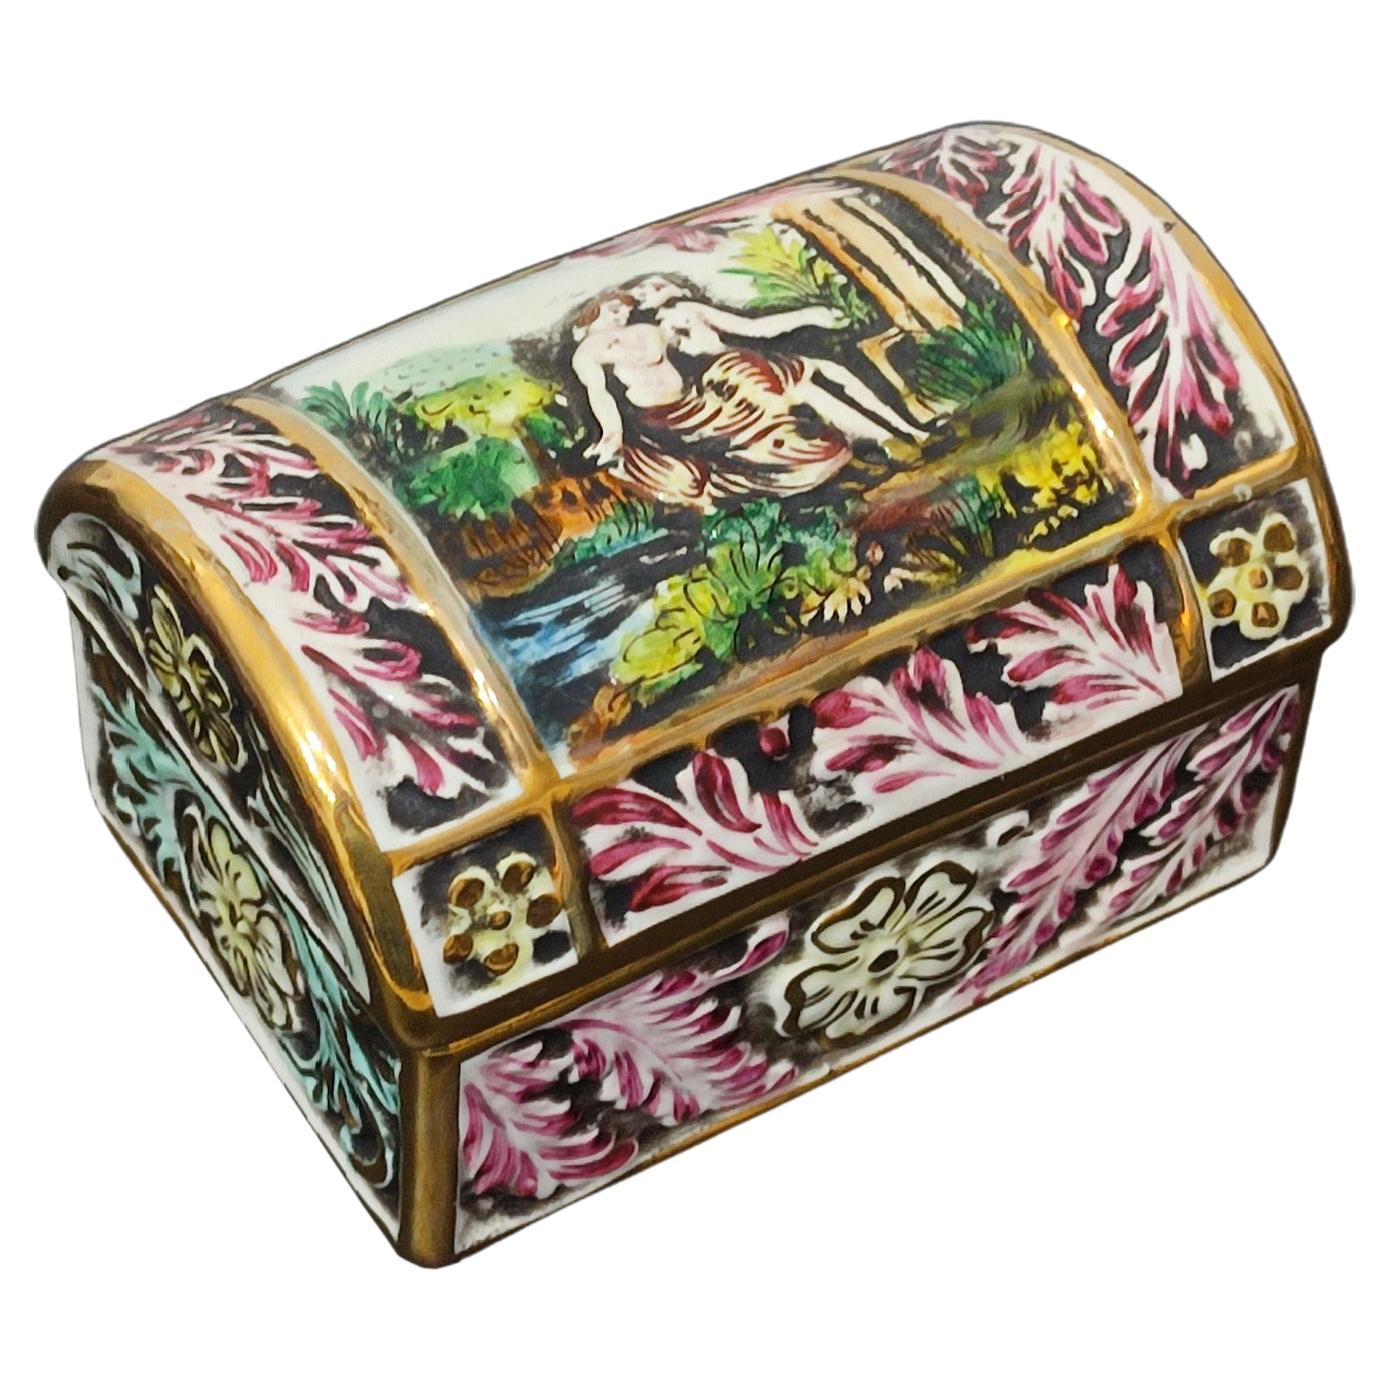 Capodimonte Porcelain Chest, Jewelry Box, Italy Mid 20th Century - LIVRAISON GRATUITE